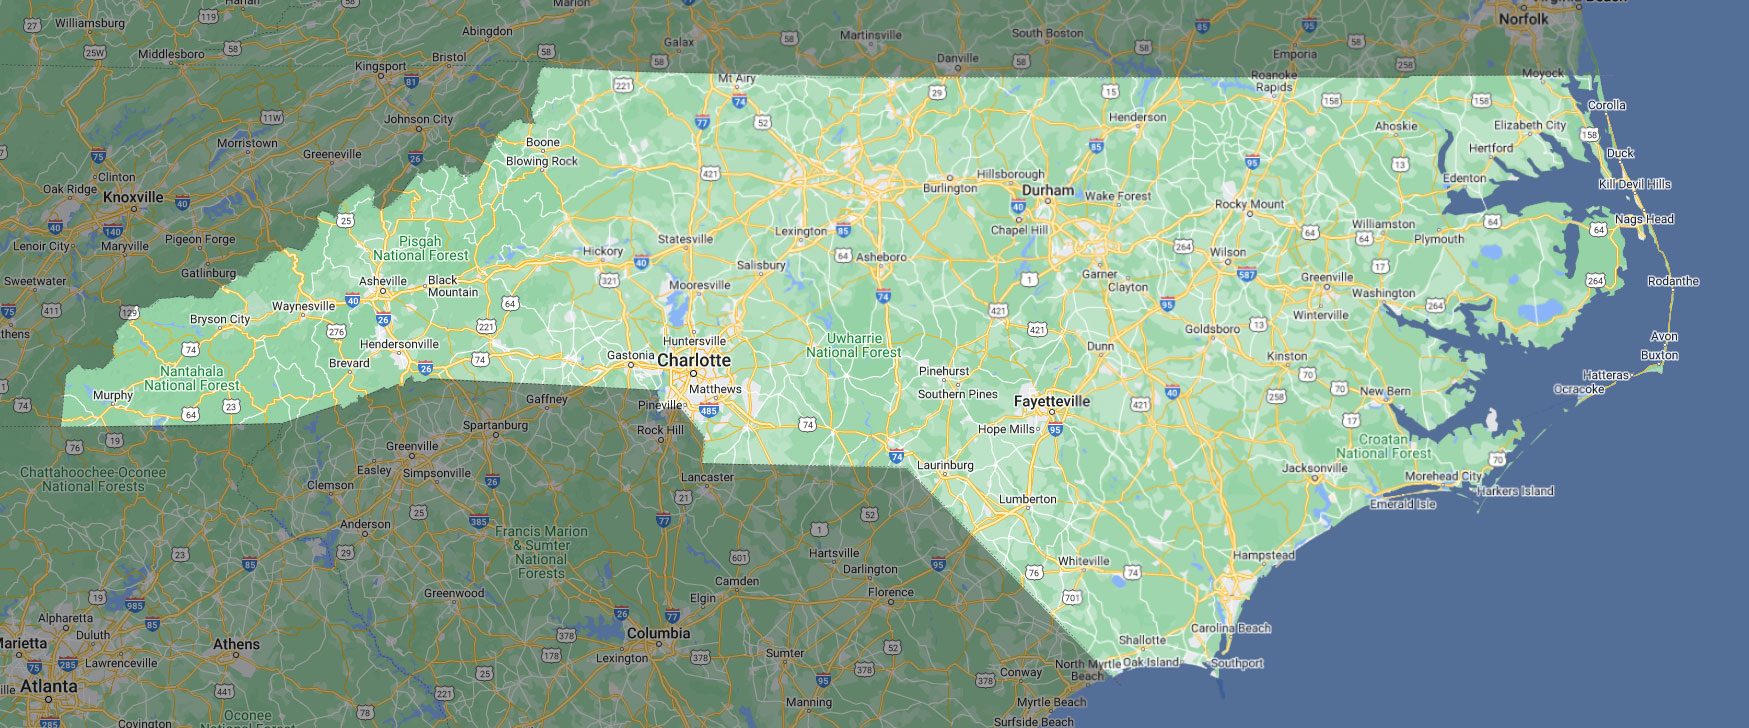 North Carolina Contractor Map